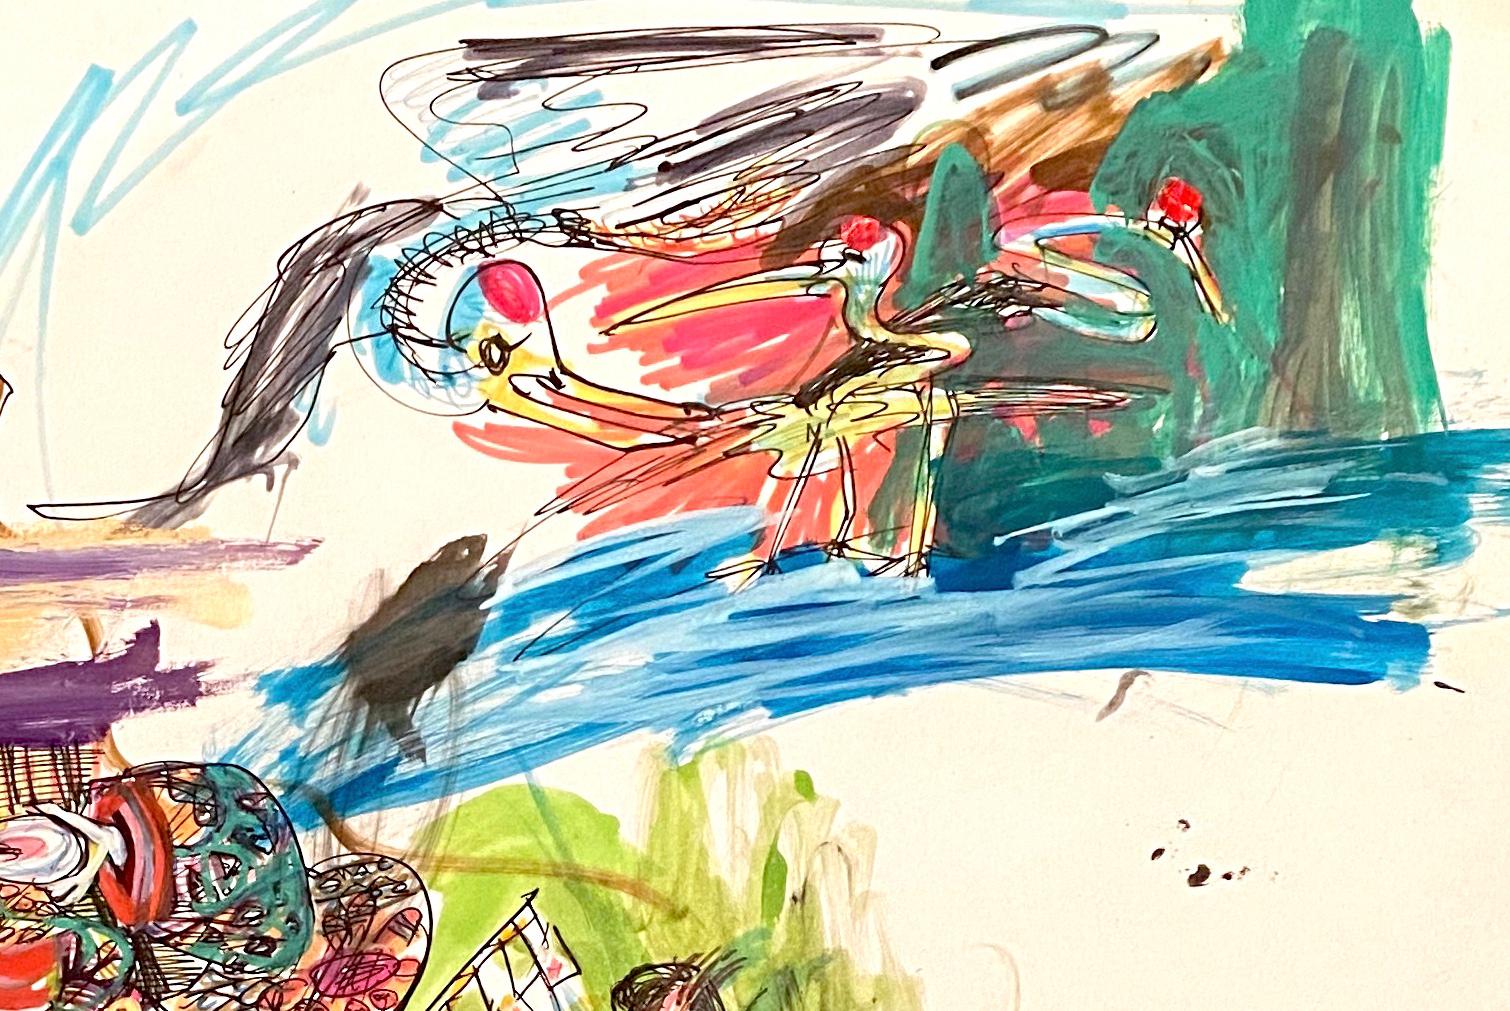 « Printcess Is Welcoming a Crane », technique mixte sur papier - dessin expressif - Art de Ushio Shinohara